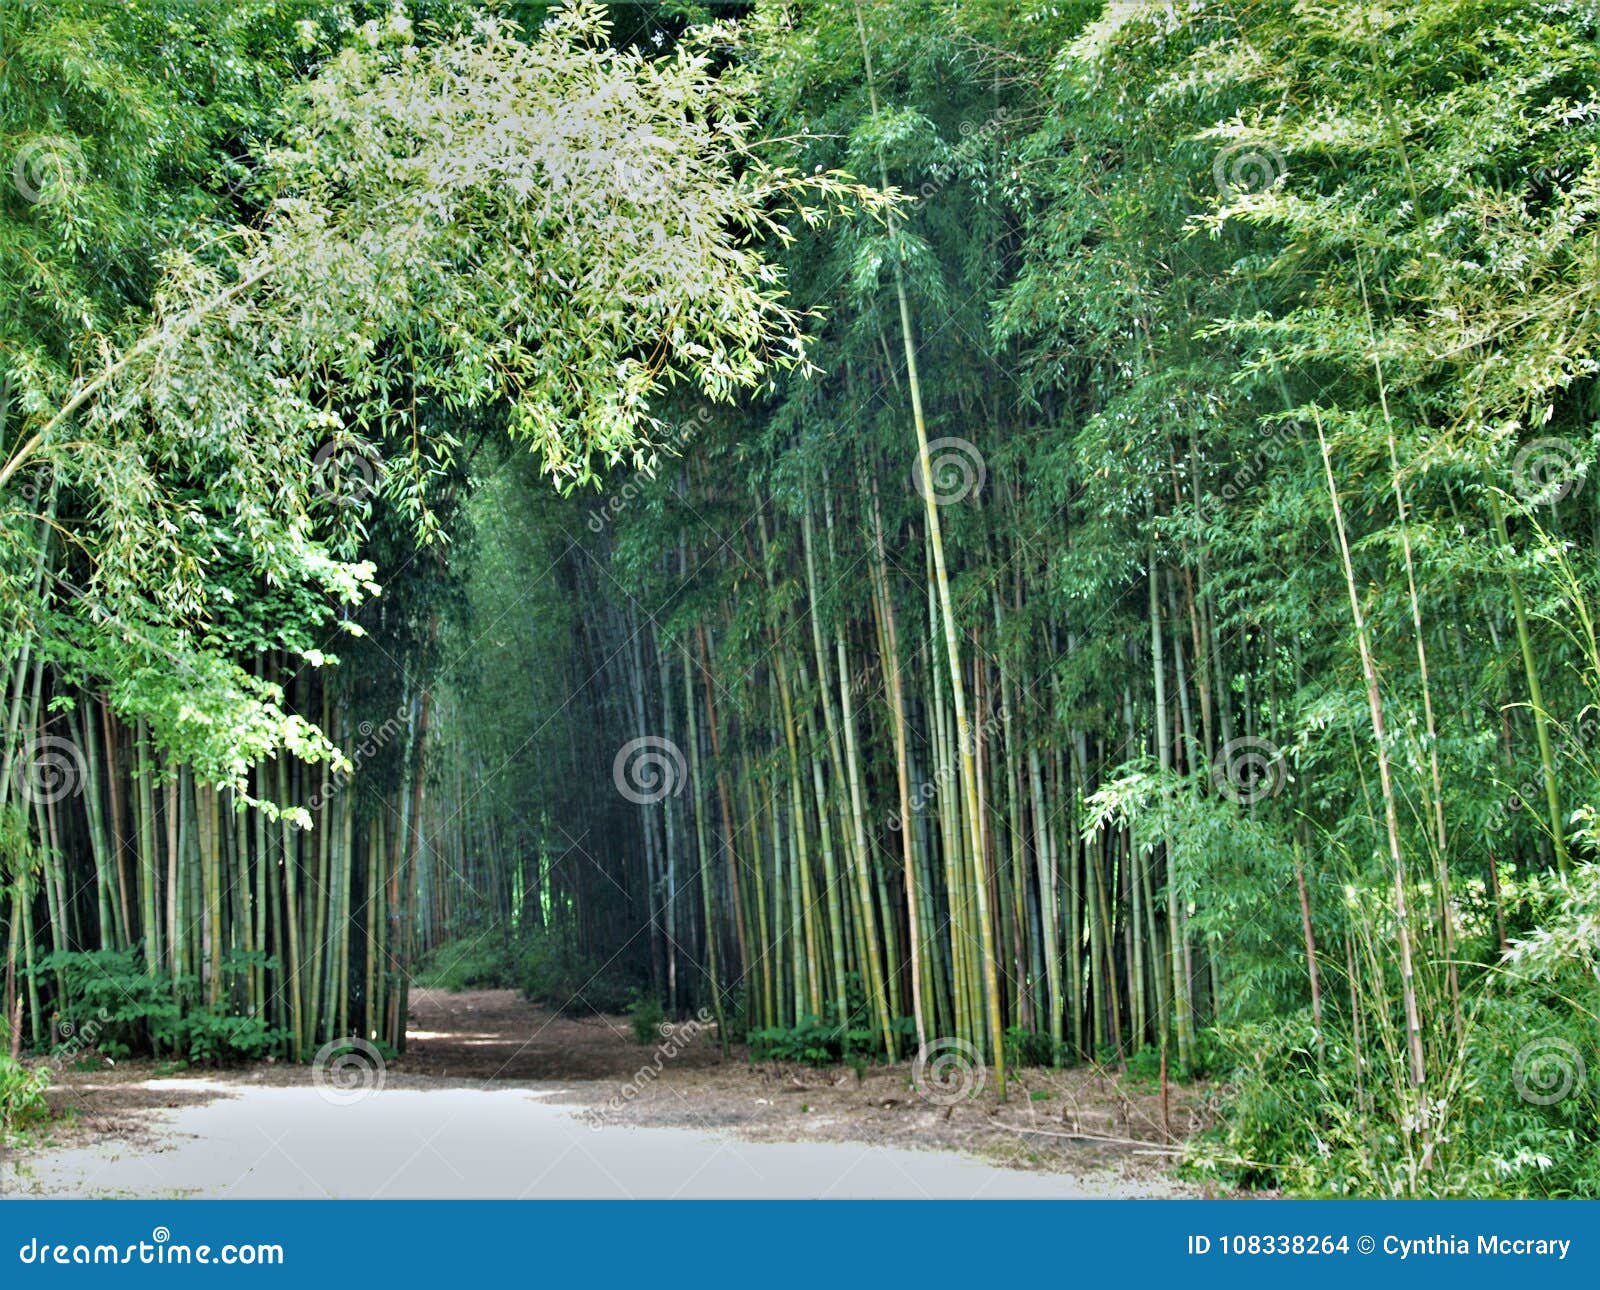 oconaluftee islands park bamboo trail